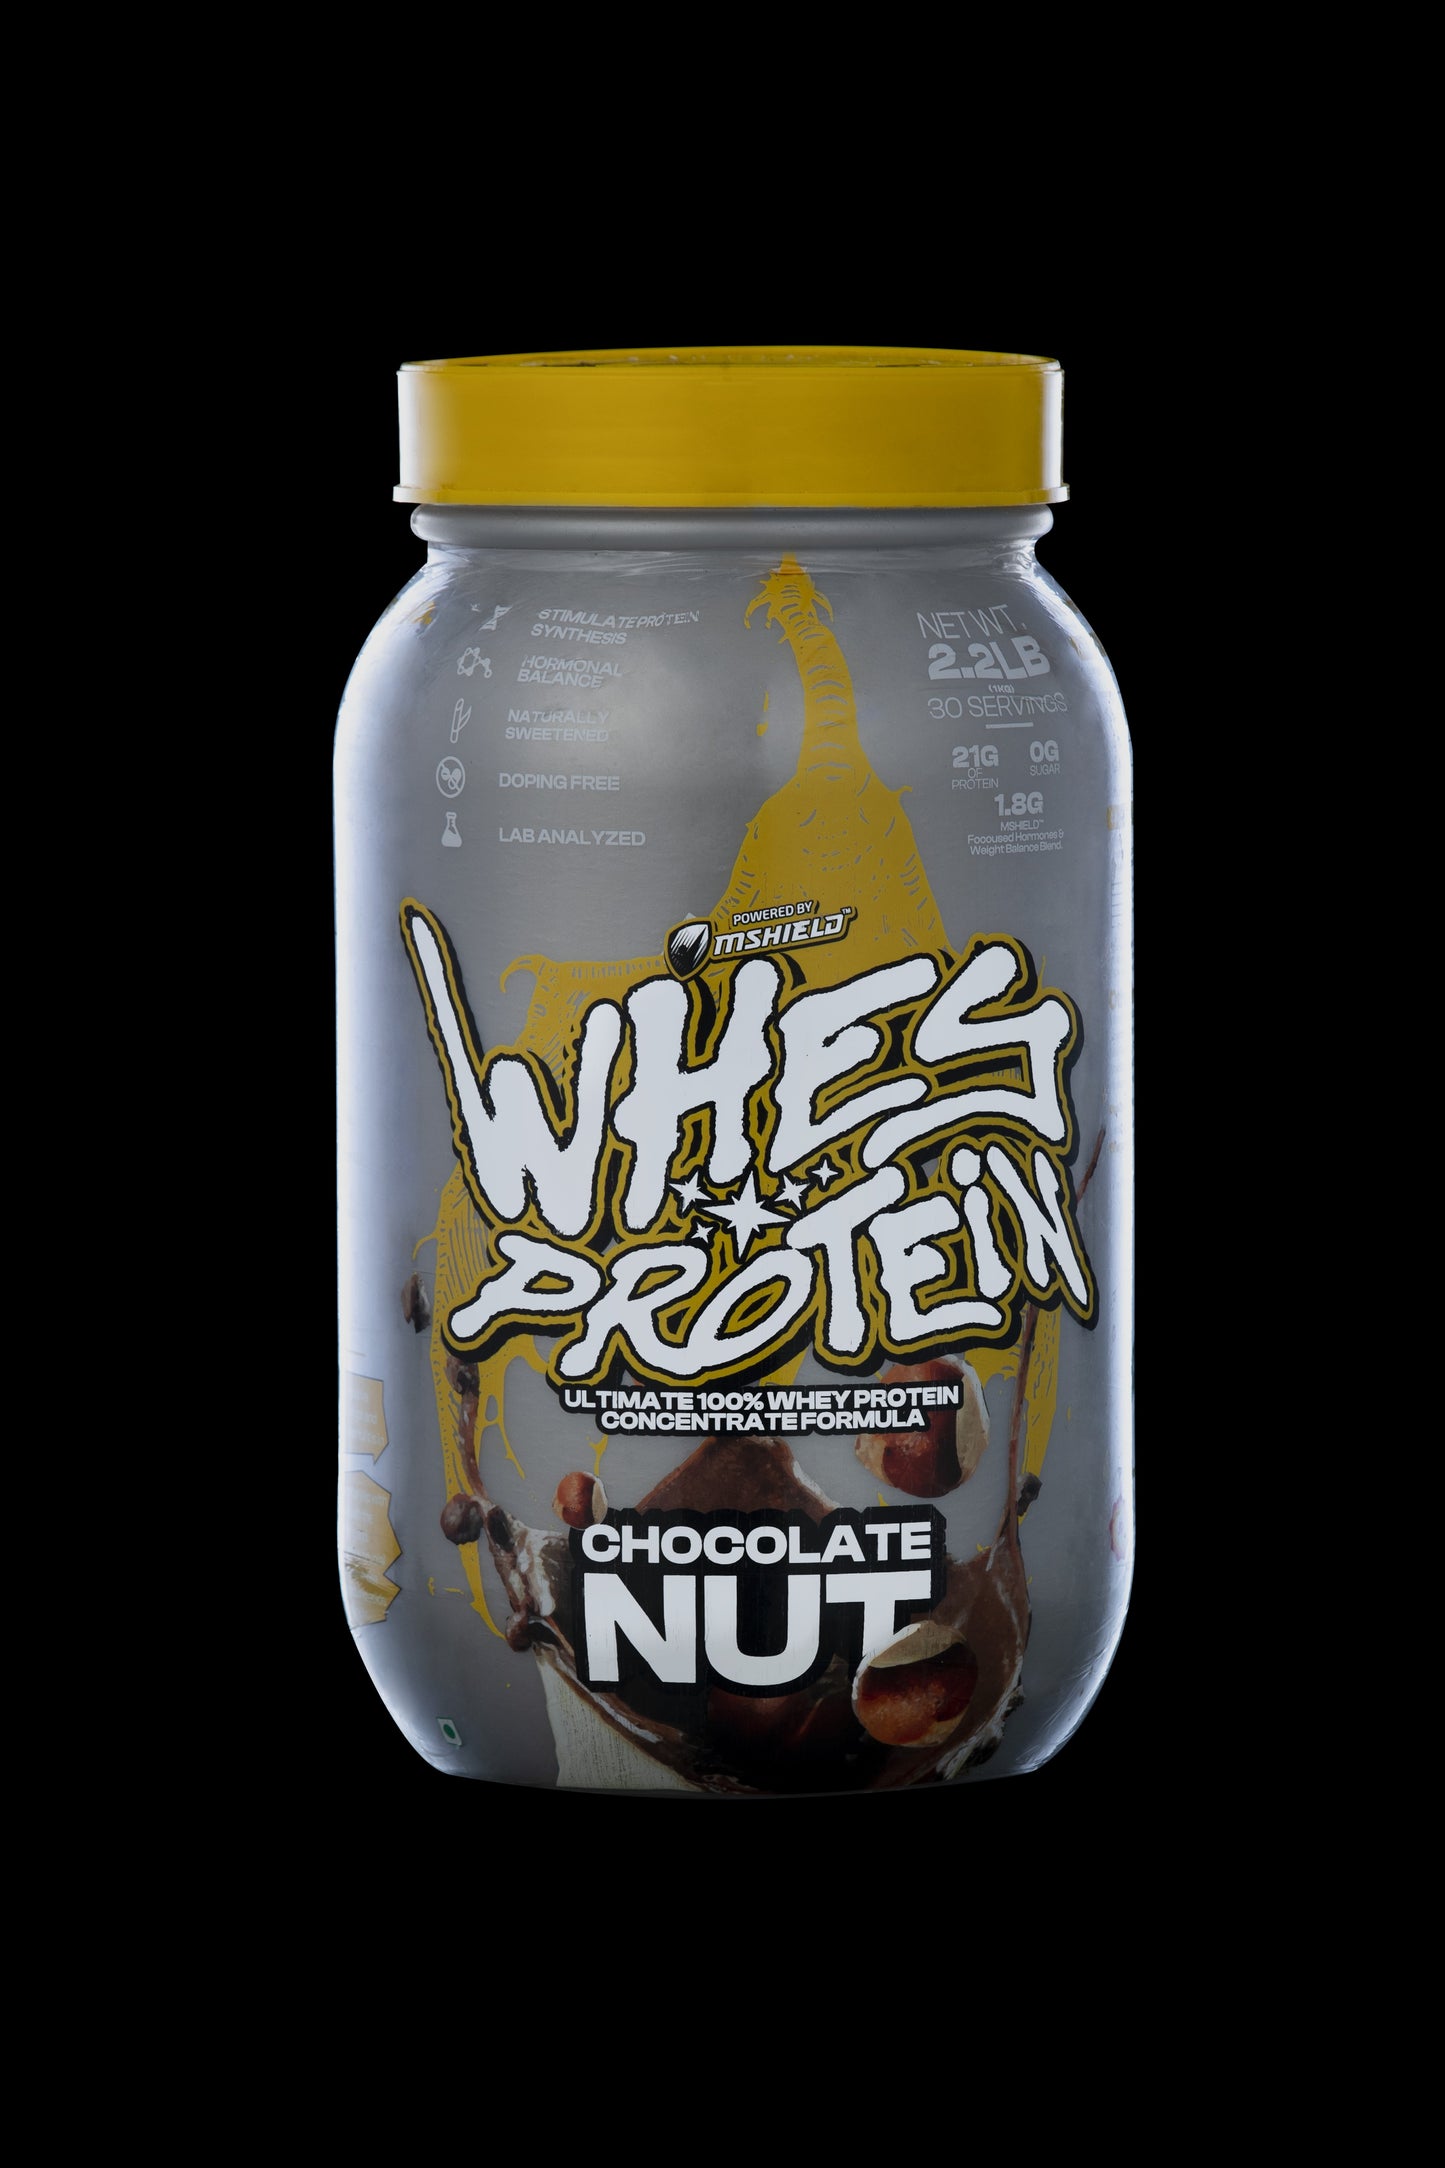 Premium Whey Protein Powder for Peak Performance